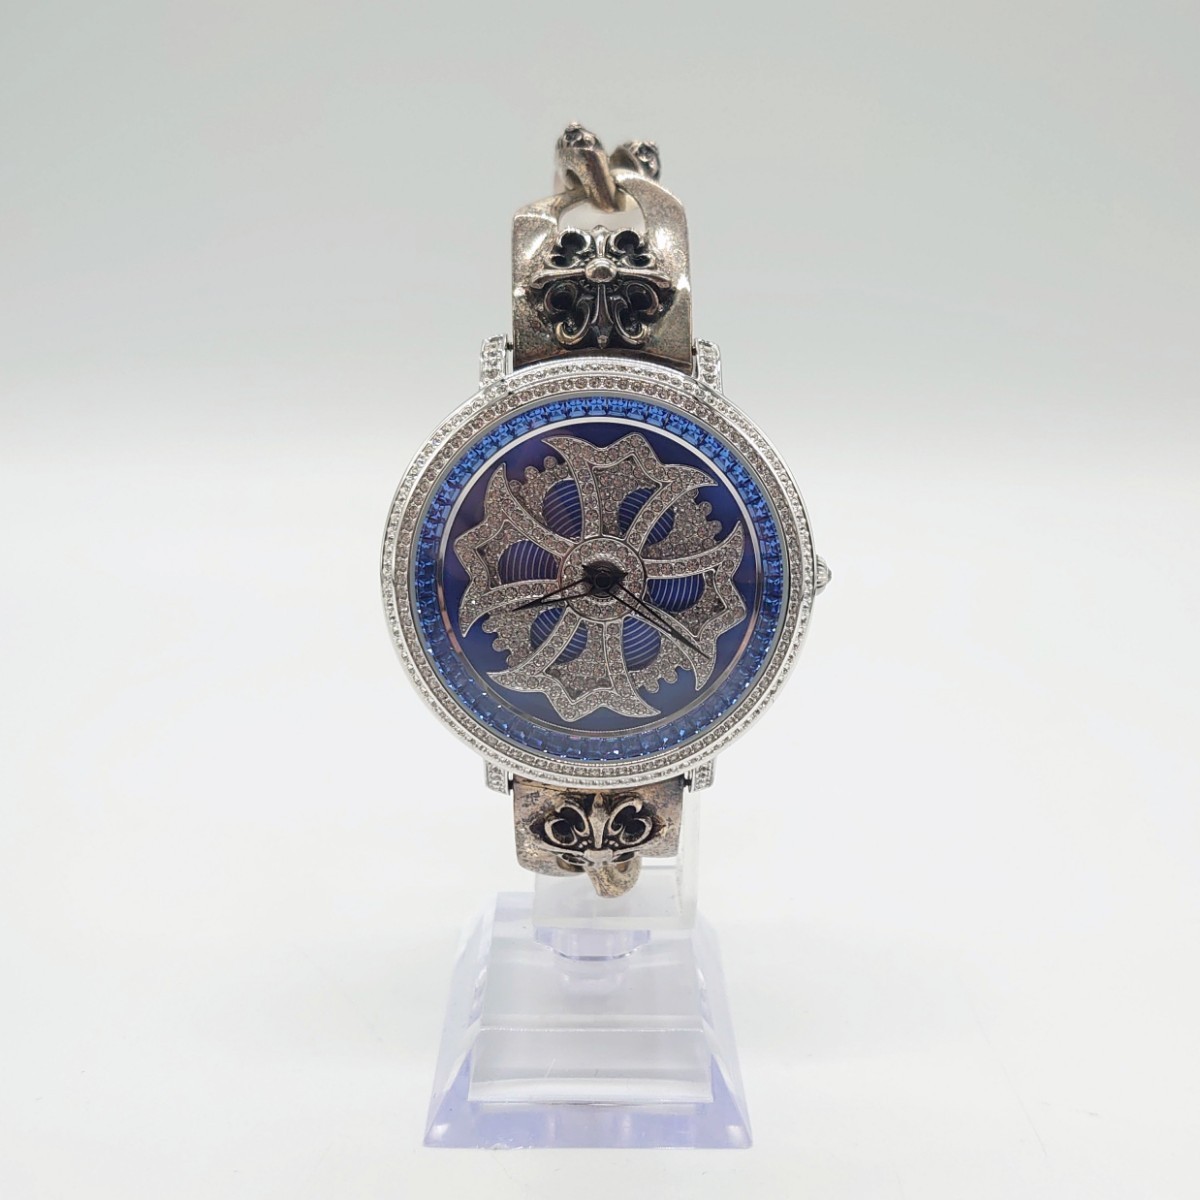 Anne Coquine アンコキーヌ クロス チェーン メンズ アナログ 腕時計 ブレスレット ブルー シルバー クリスタル ストーン 回転 tp-23x488